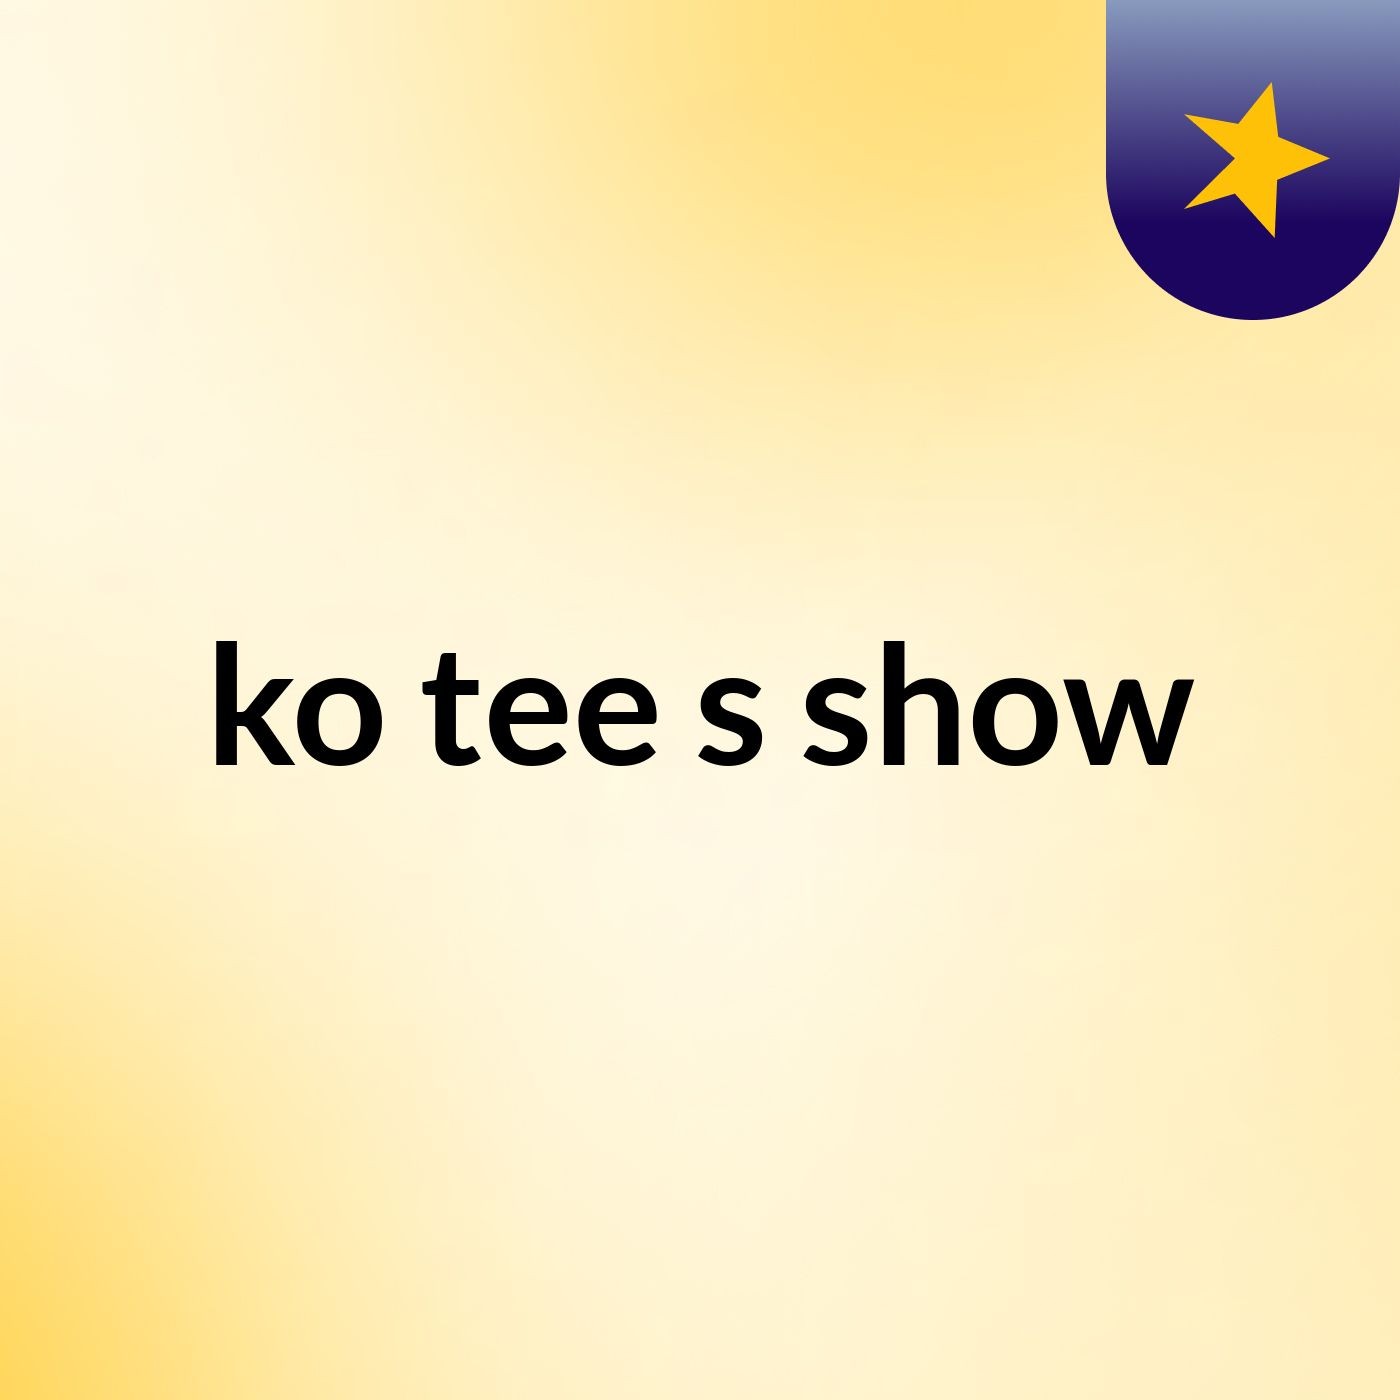 ko tee's show